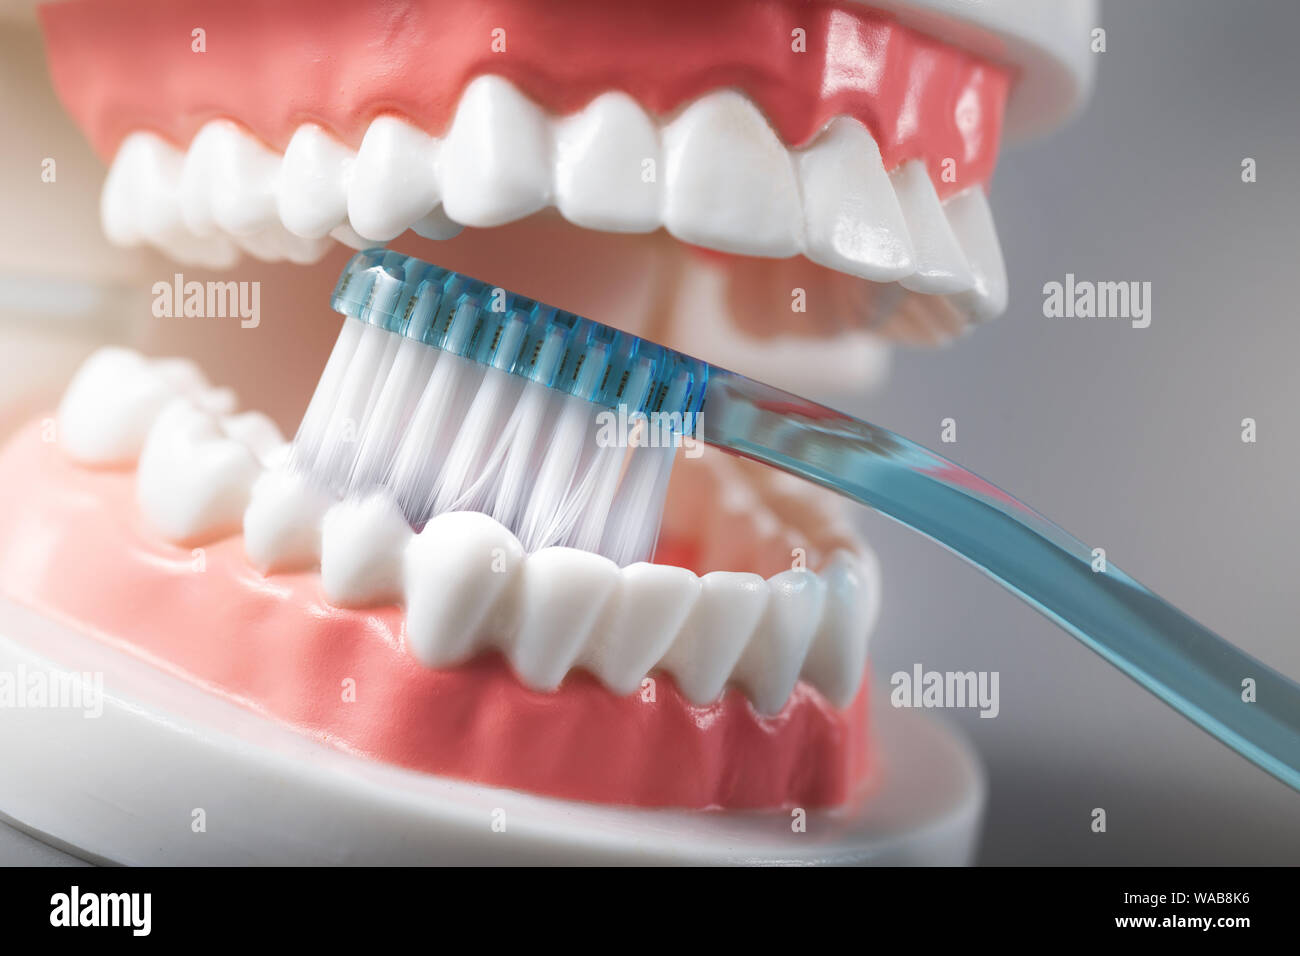 dental hygiene - teeth brushing demonstration on tooth model Stock Photo